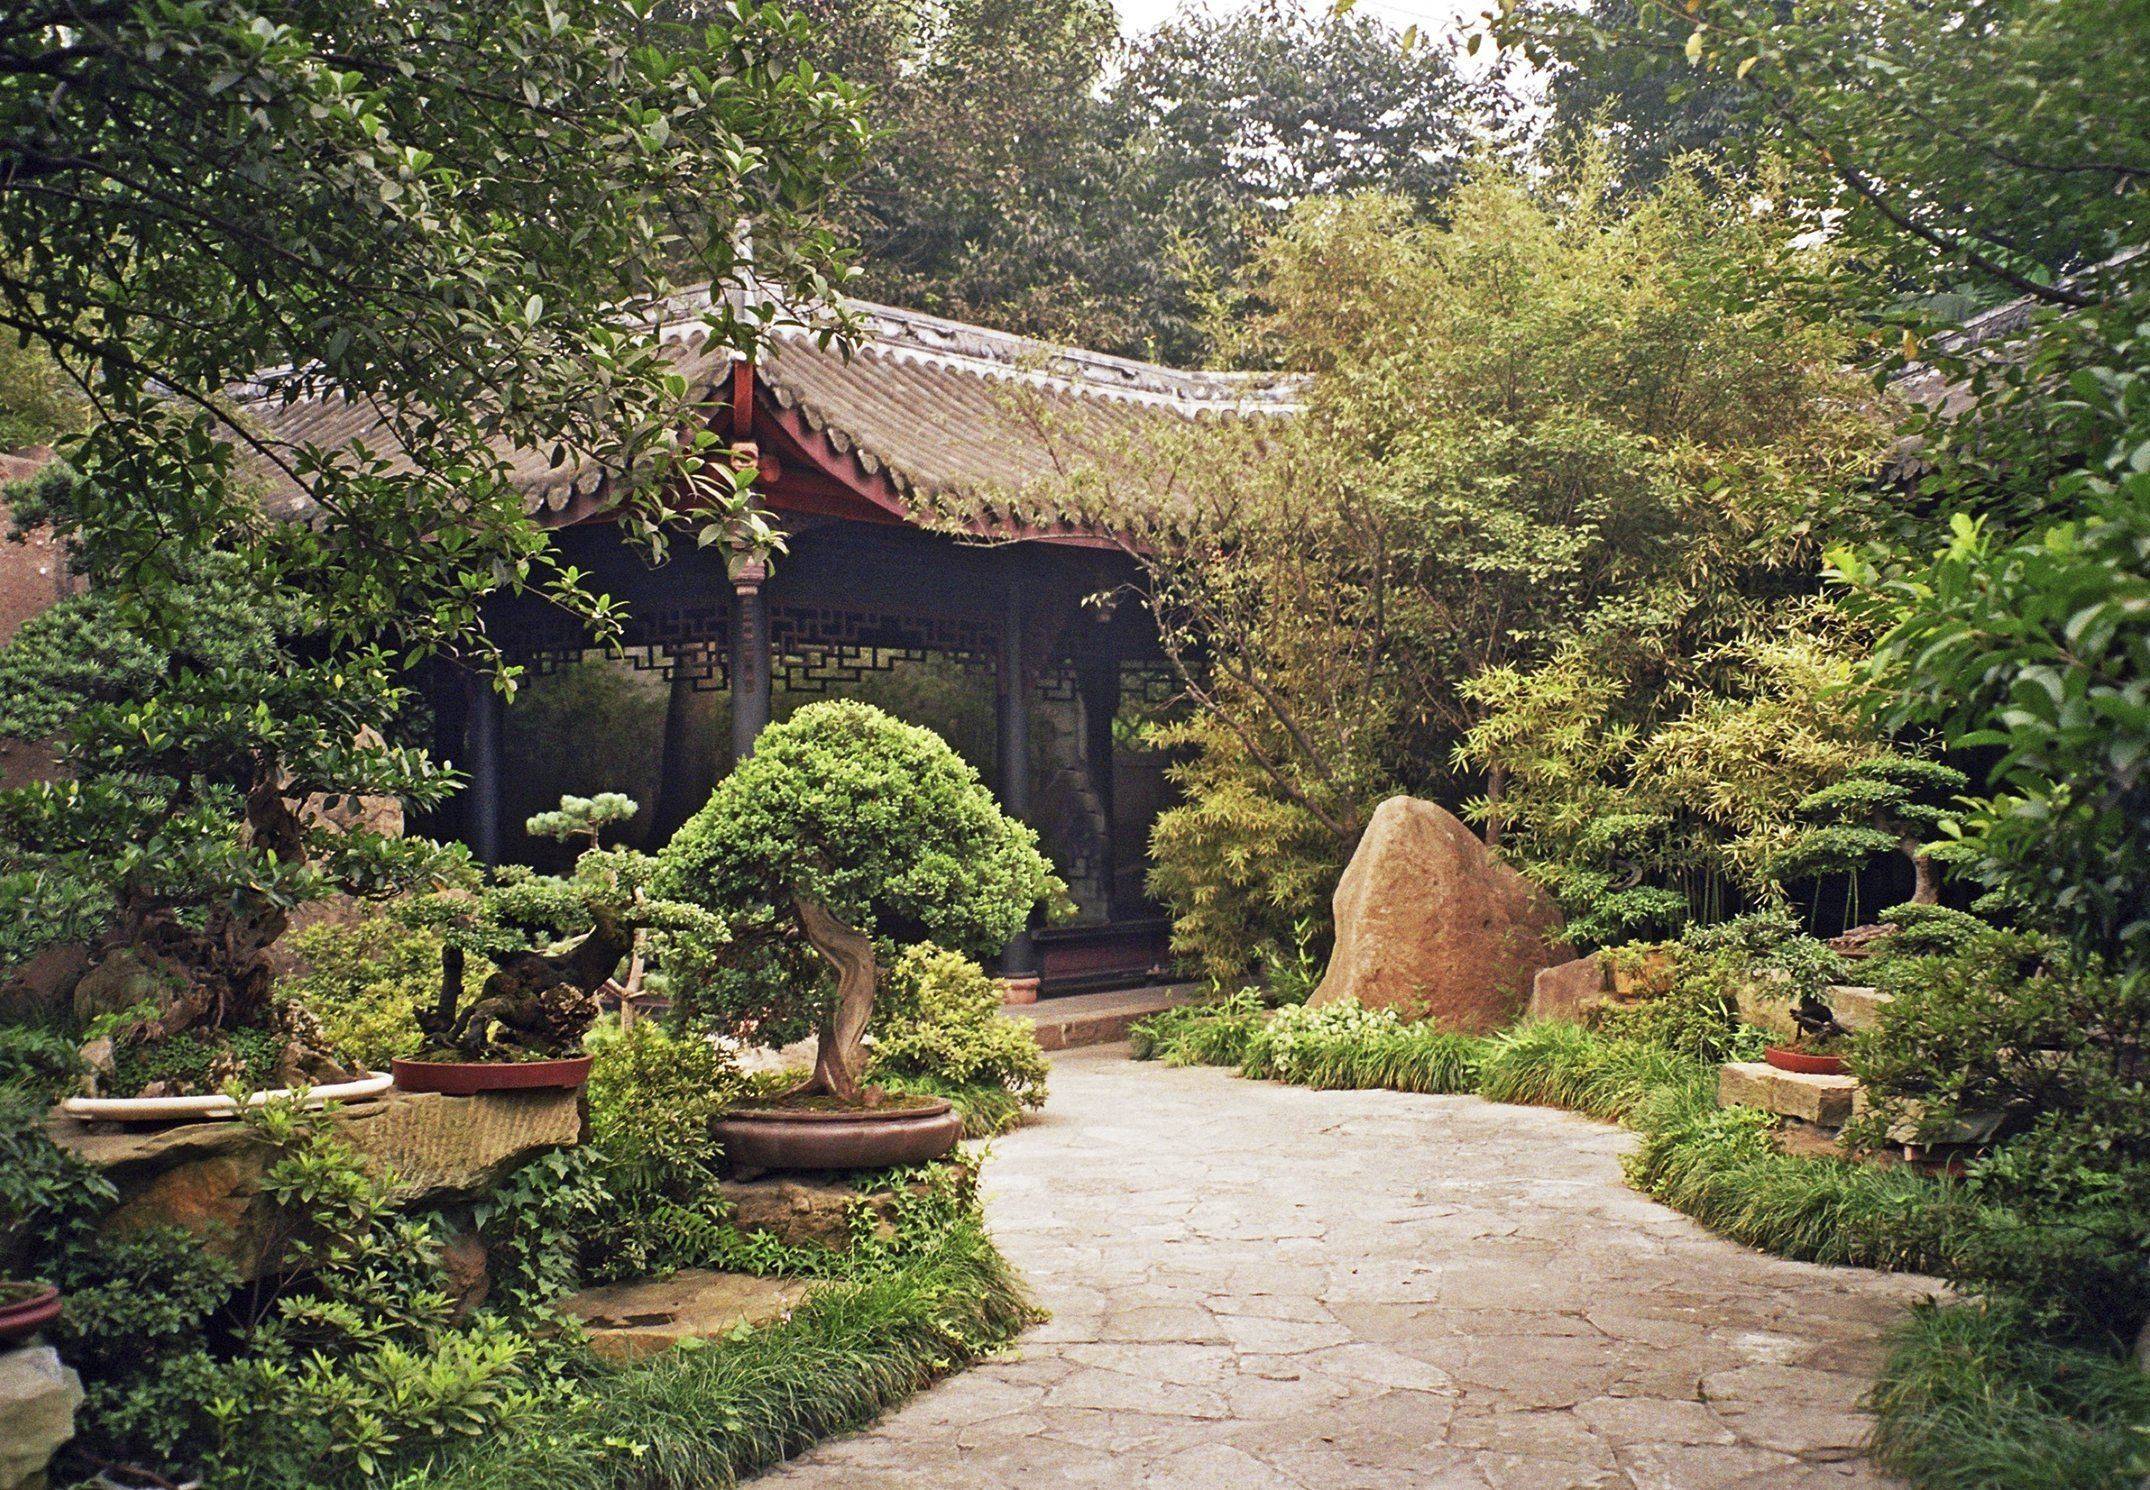 Chinese Garden Decor